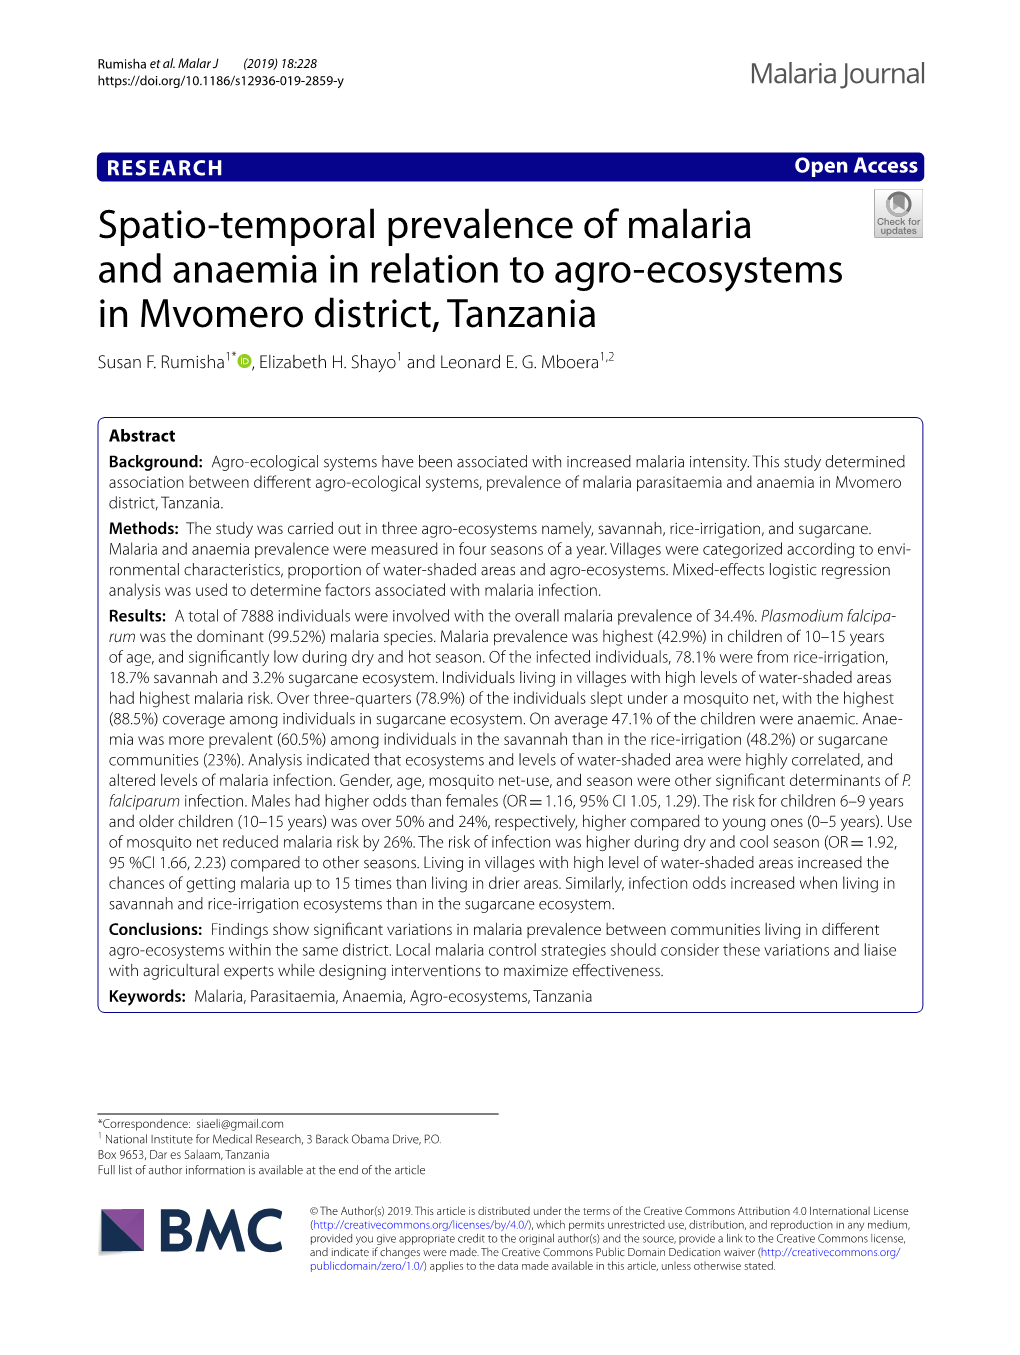 Spatio-Temporal Prevalence of Malaria and Anaemia in Relation to Agro-Ecosystems in Mvomero District, Tanzania